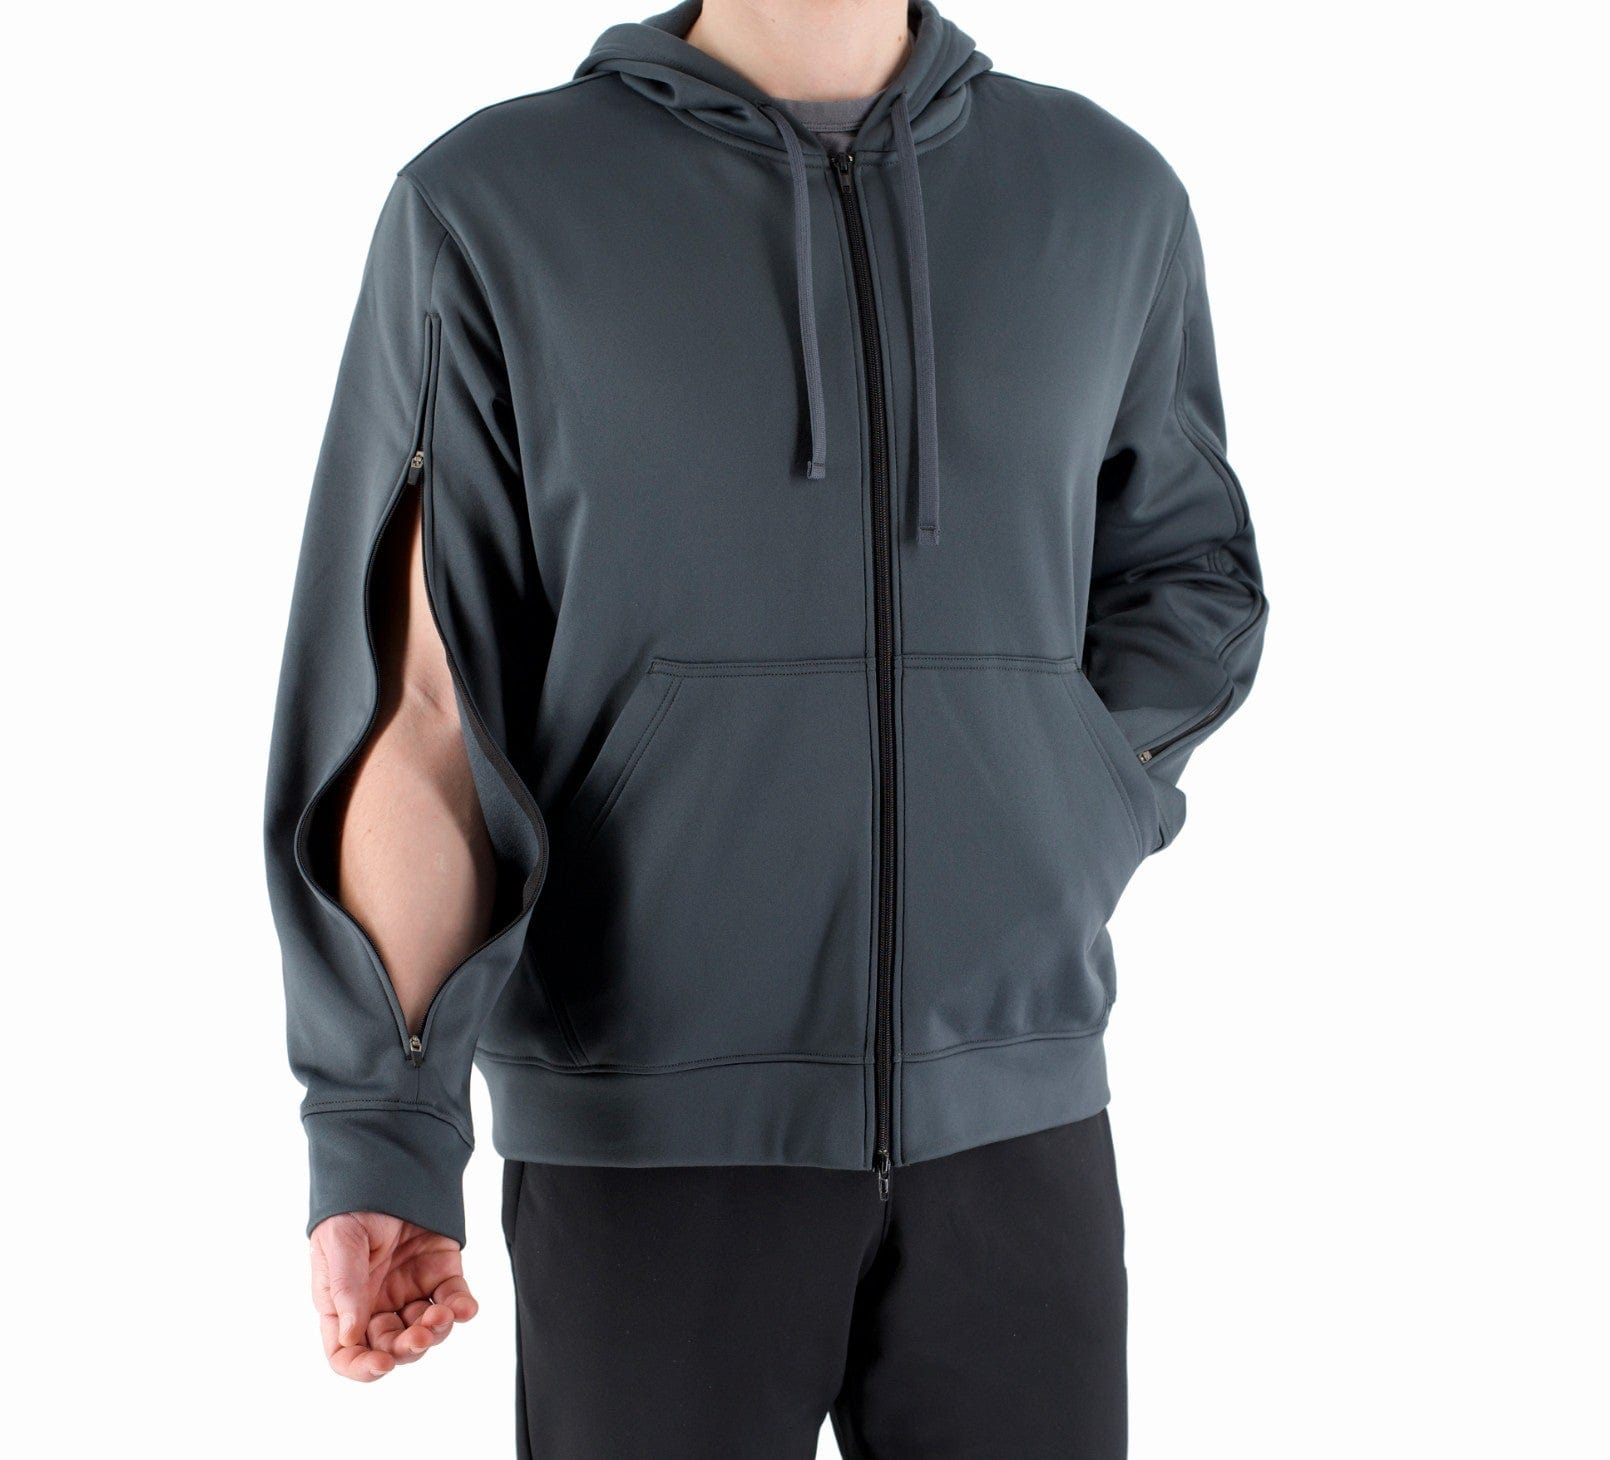 Dialysis Sweatshirt with Sleeve Zippers - Men's - Women's - Unisex Sizing Renova Medical Wear